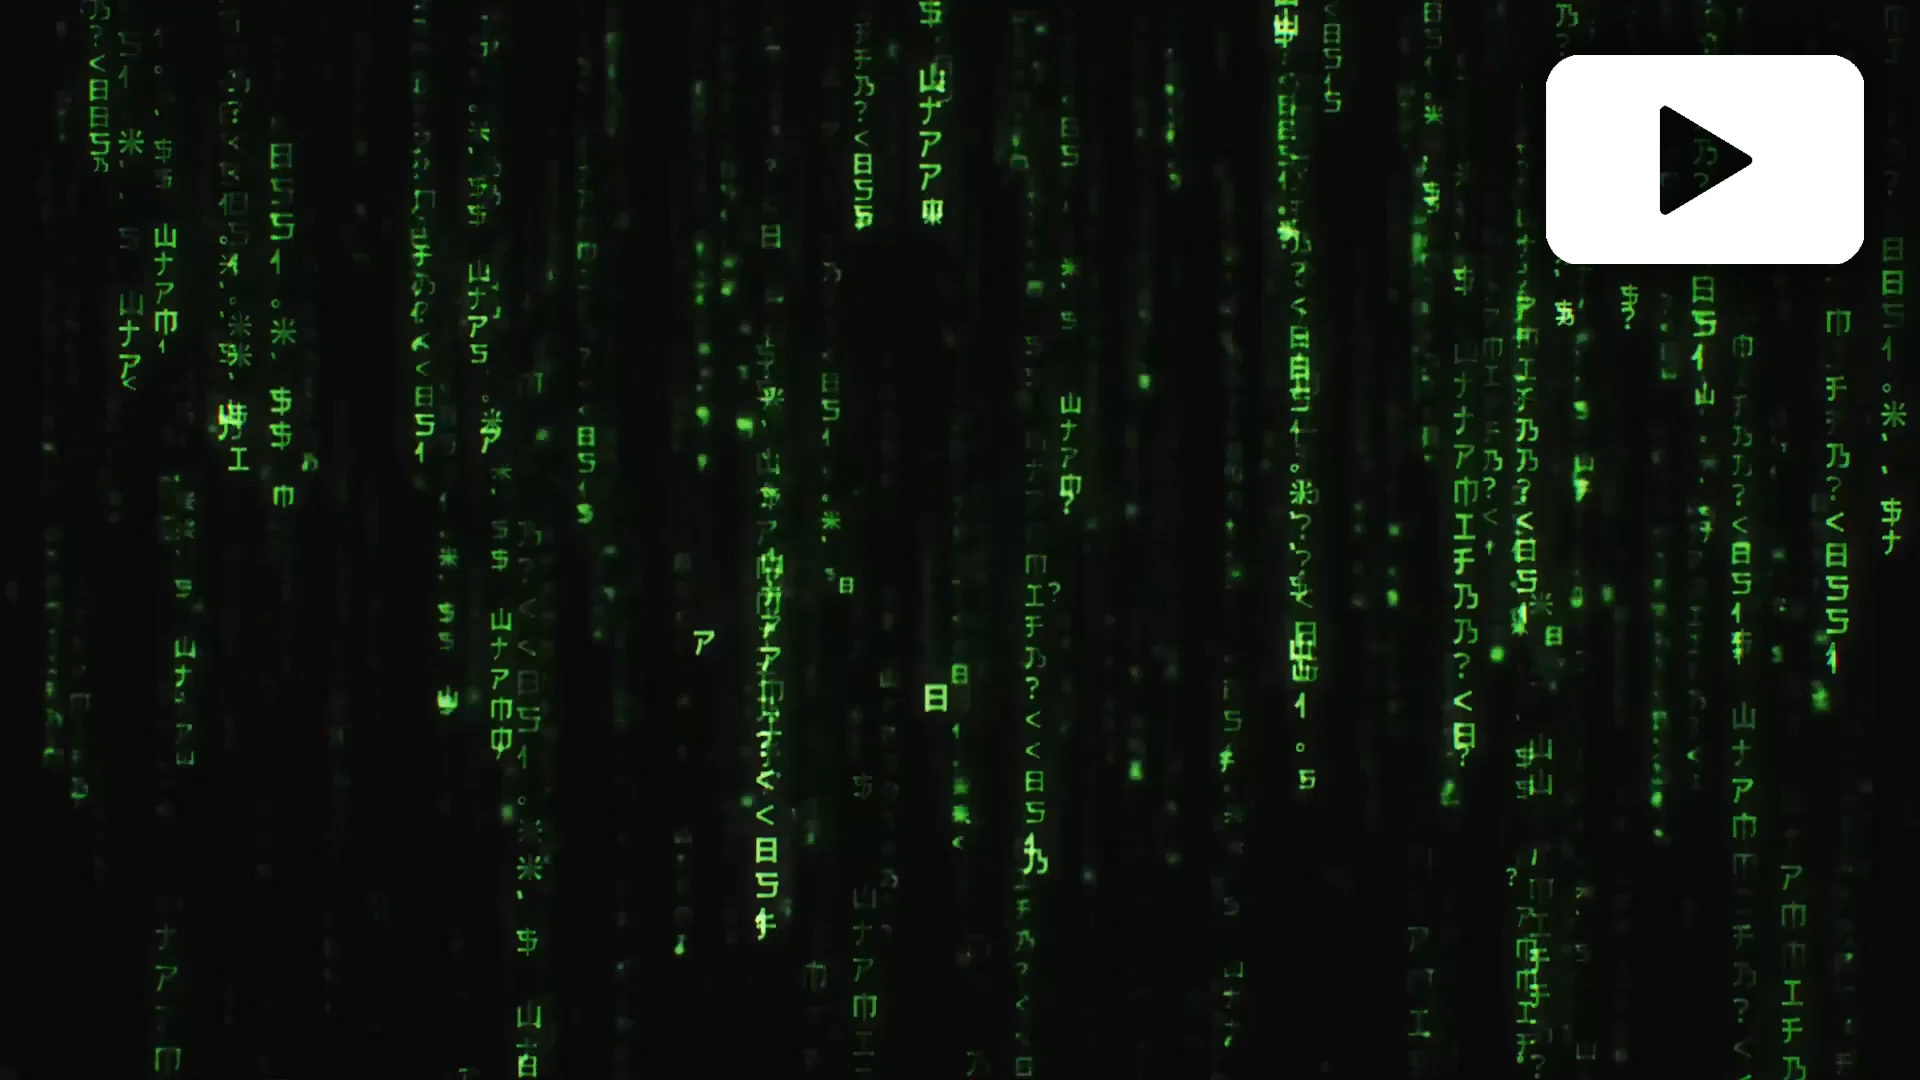 Grillig Worden roem The Matrix digital rain video - Virtual Backgrounds